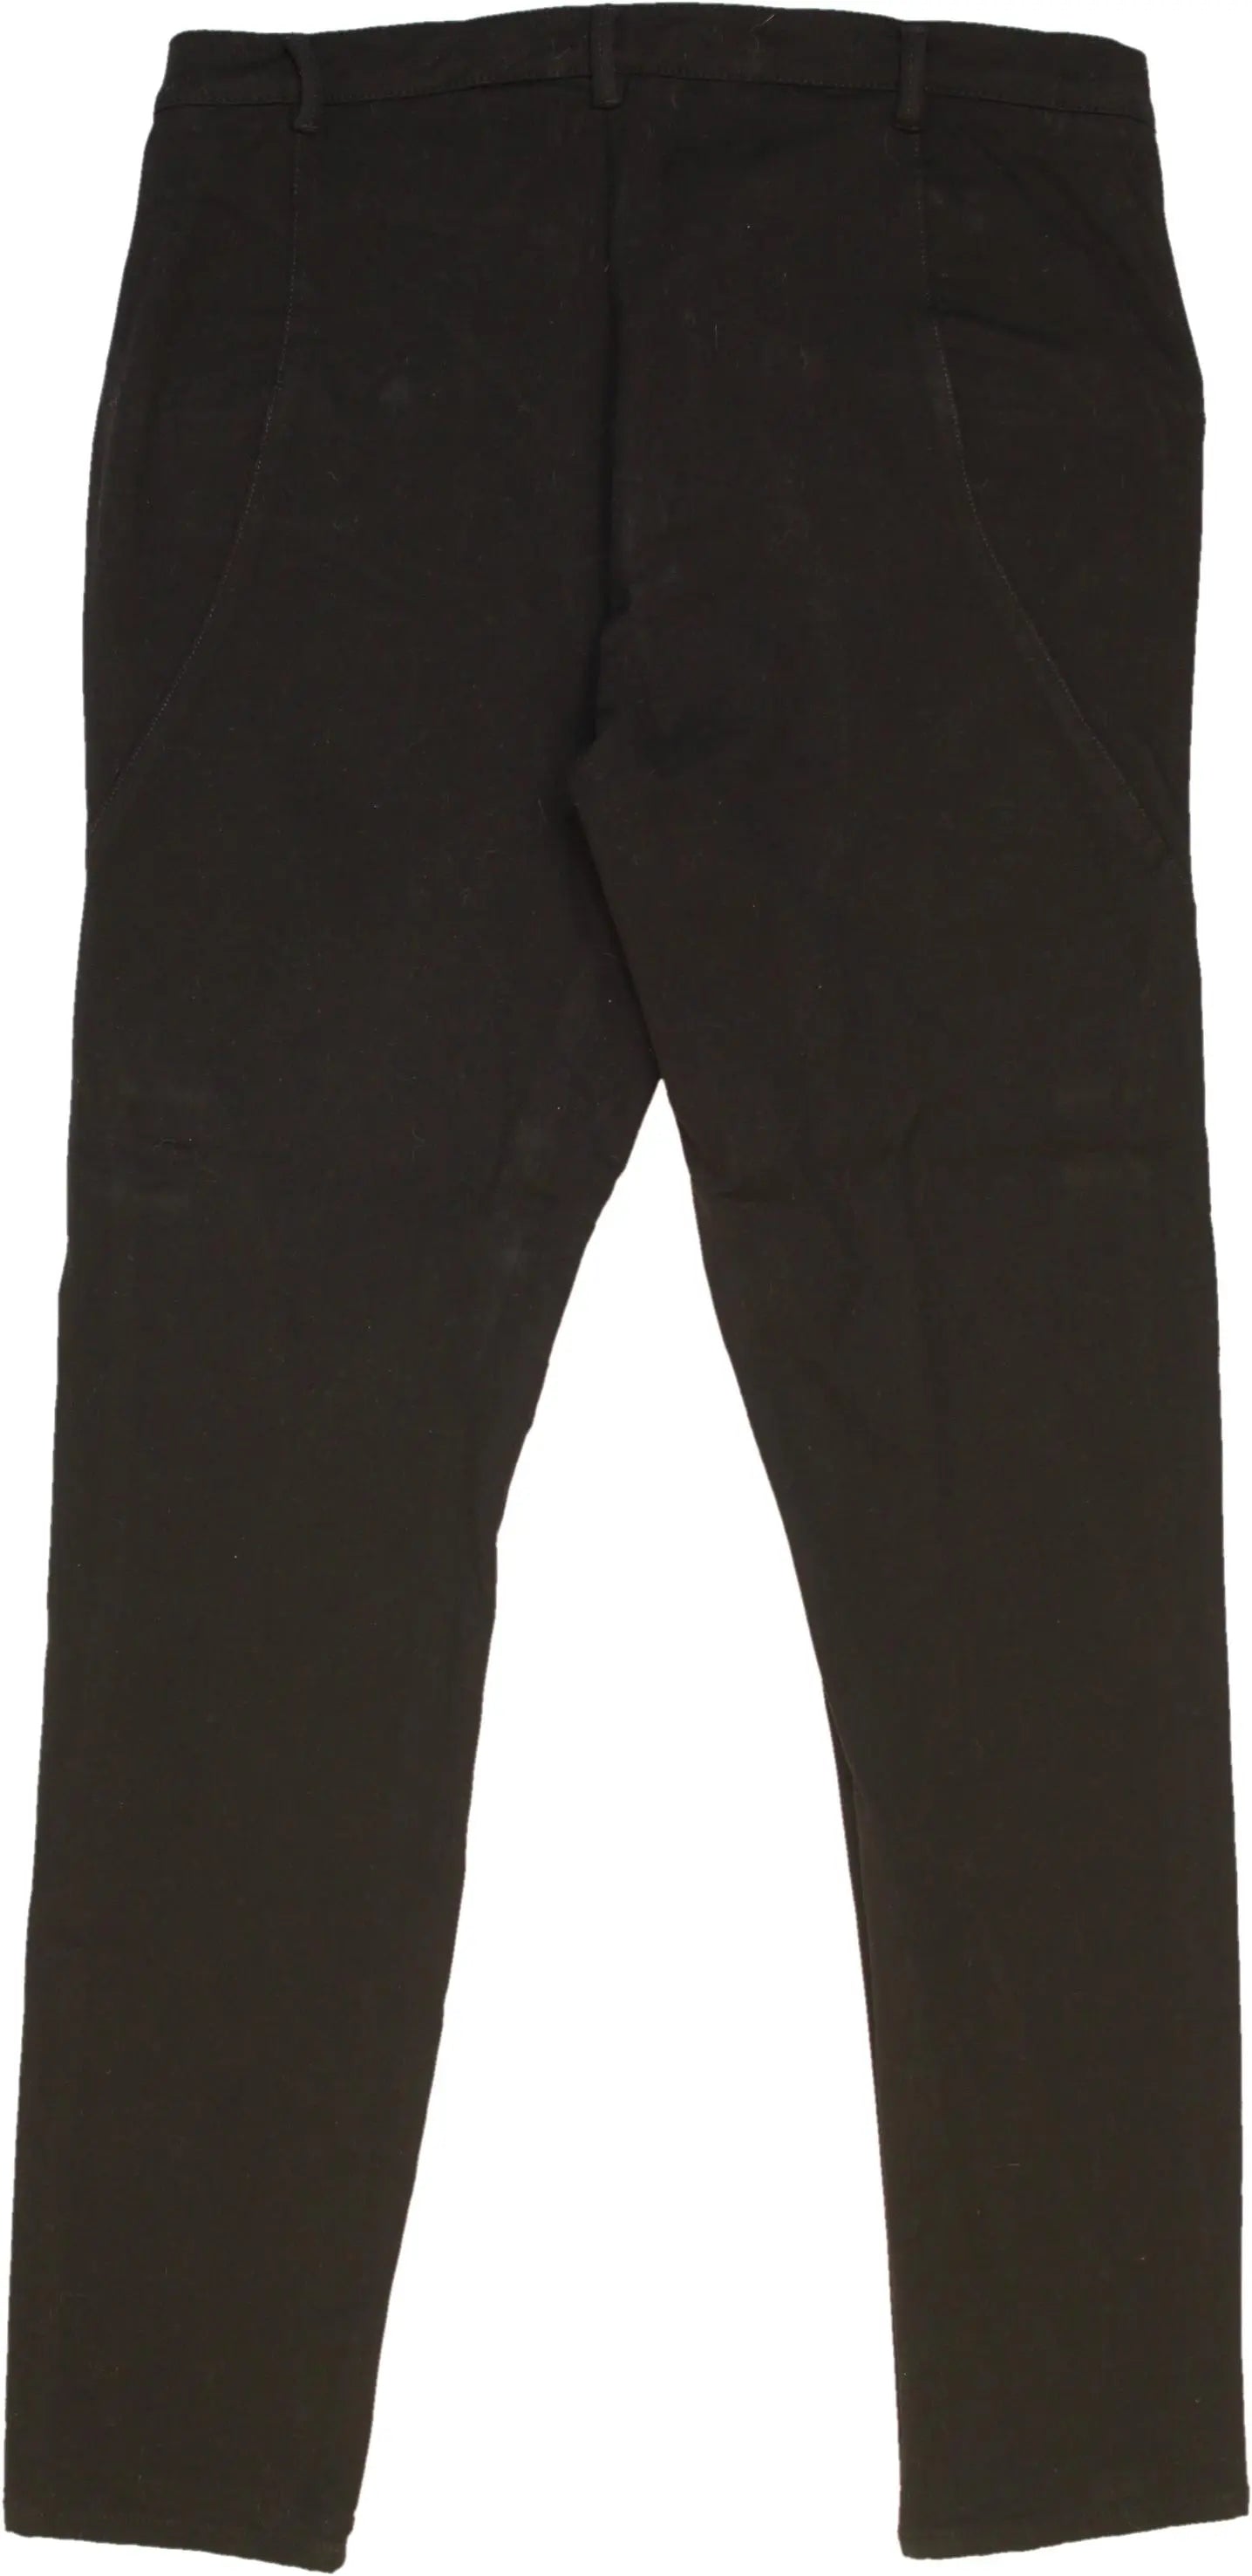 Corel - Black Pants- ThriftTale.com - Vintage and second handclothing